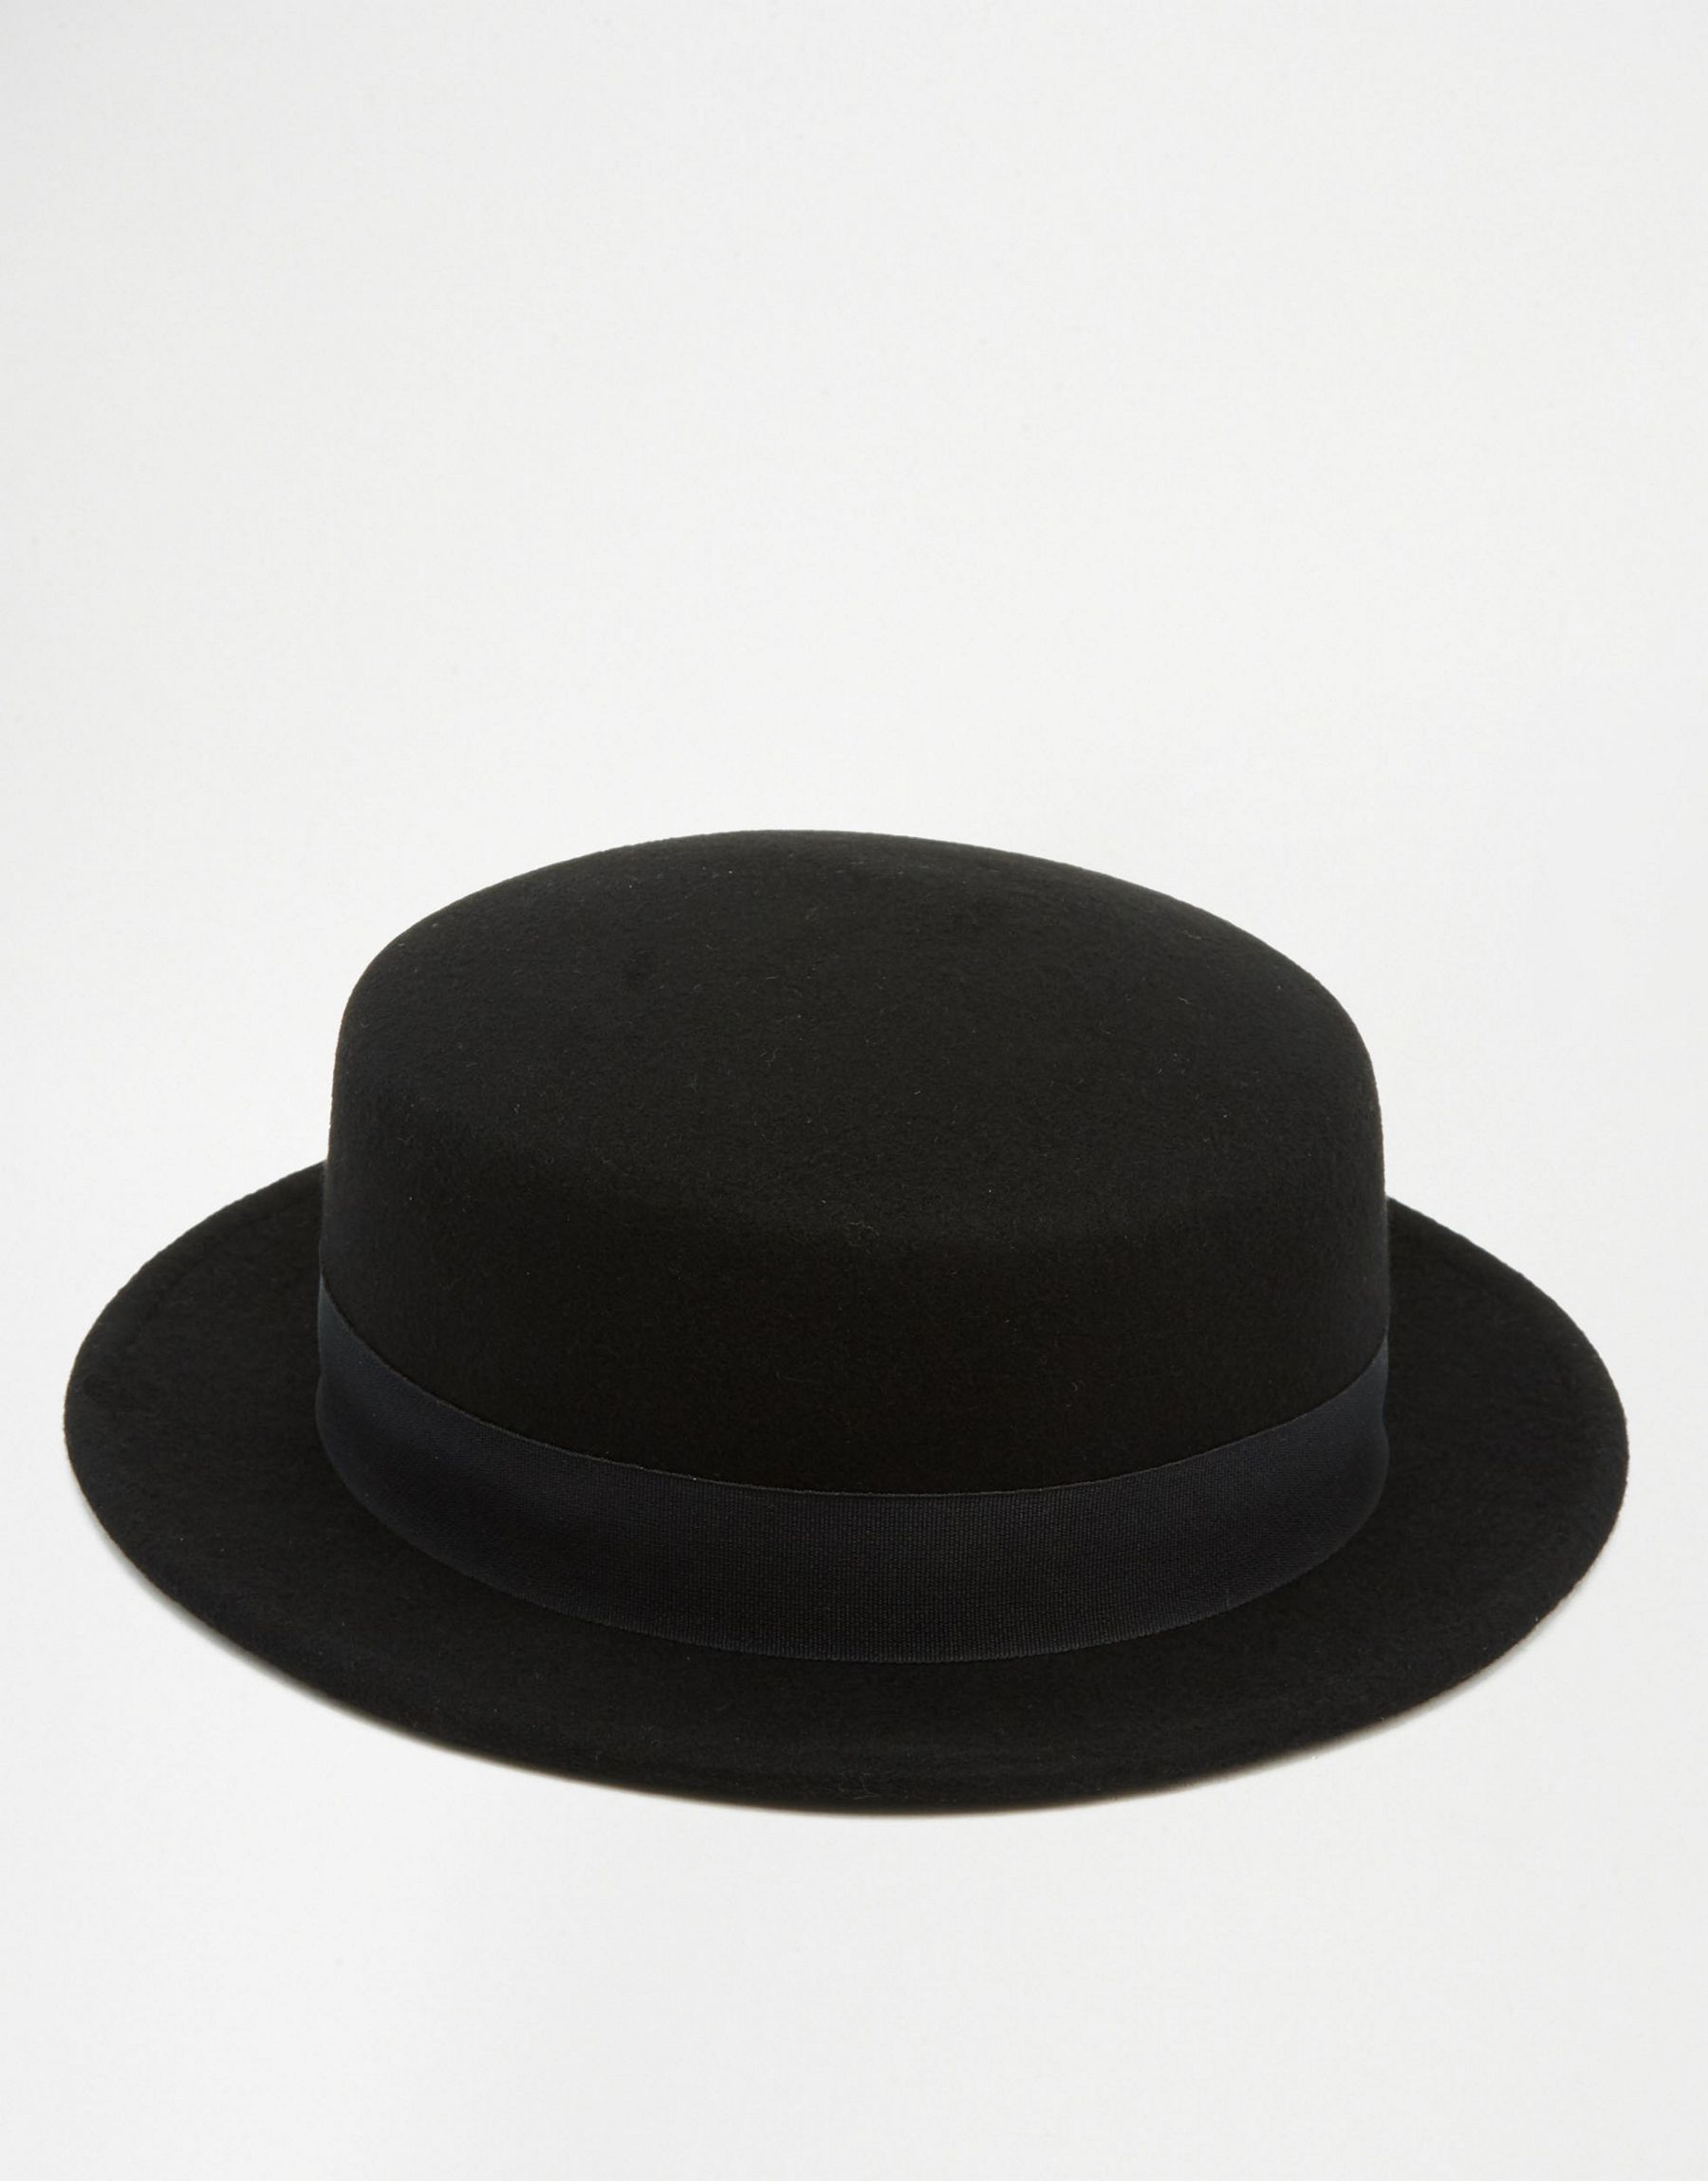 ASOS Wool Flat Top Hat With Narrow Brim in Black for Men - Lyst